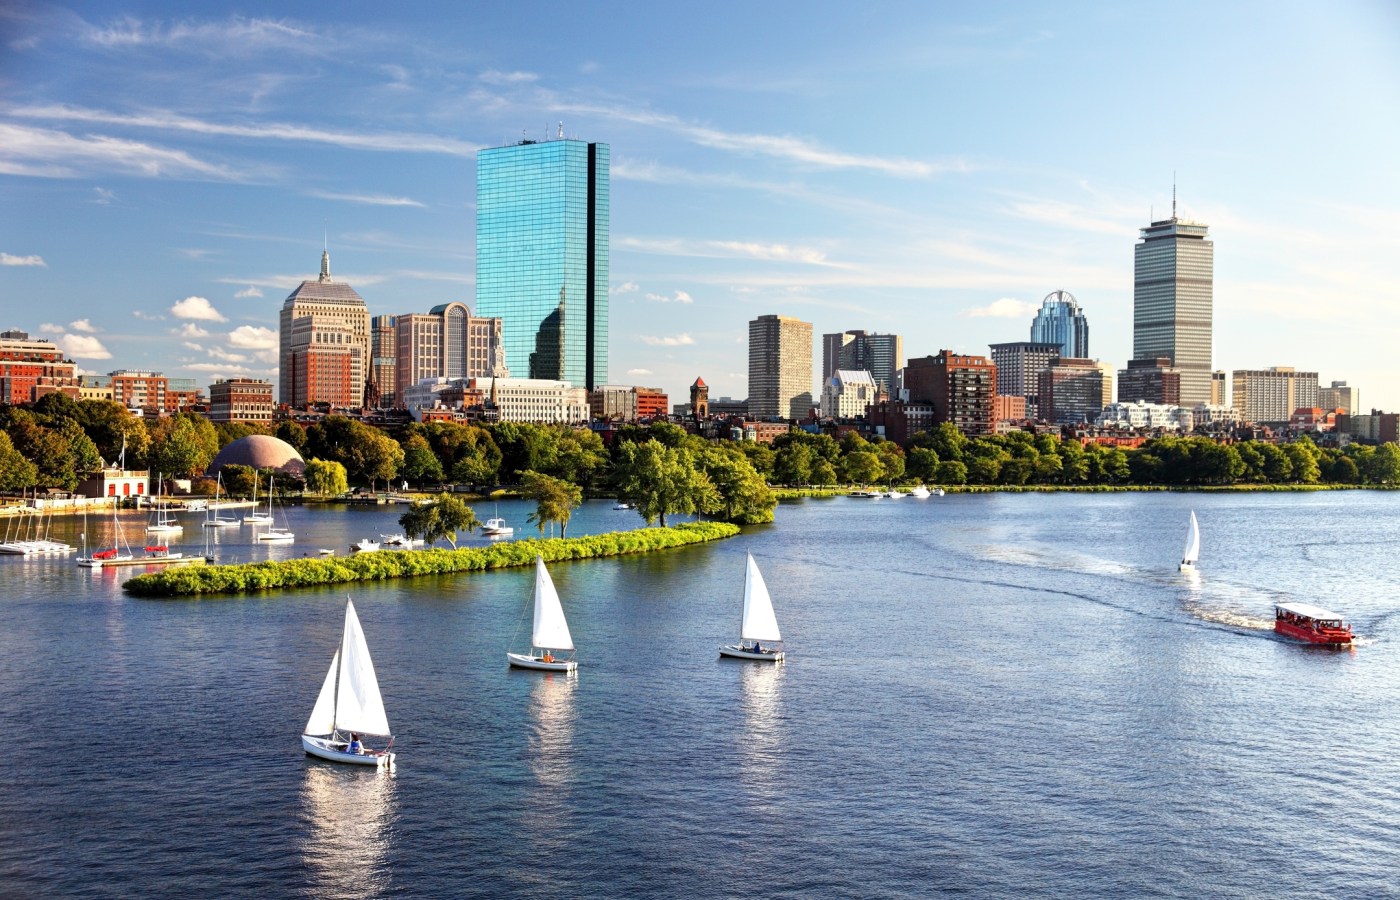 transitional housing story Boston